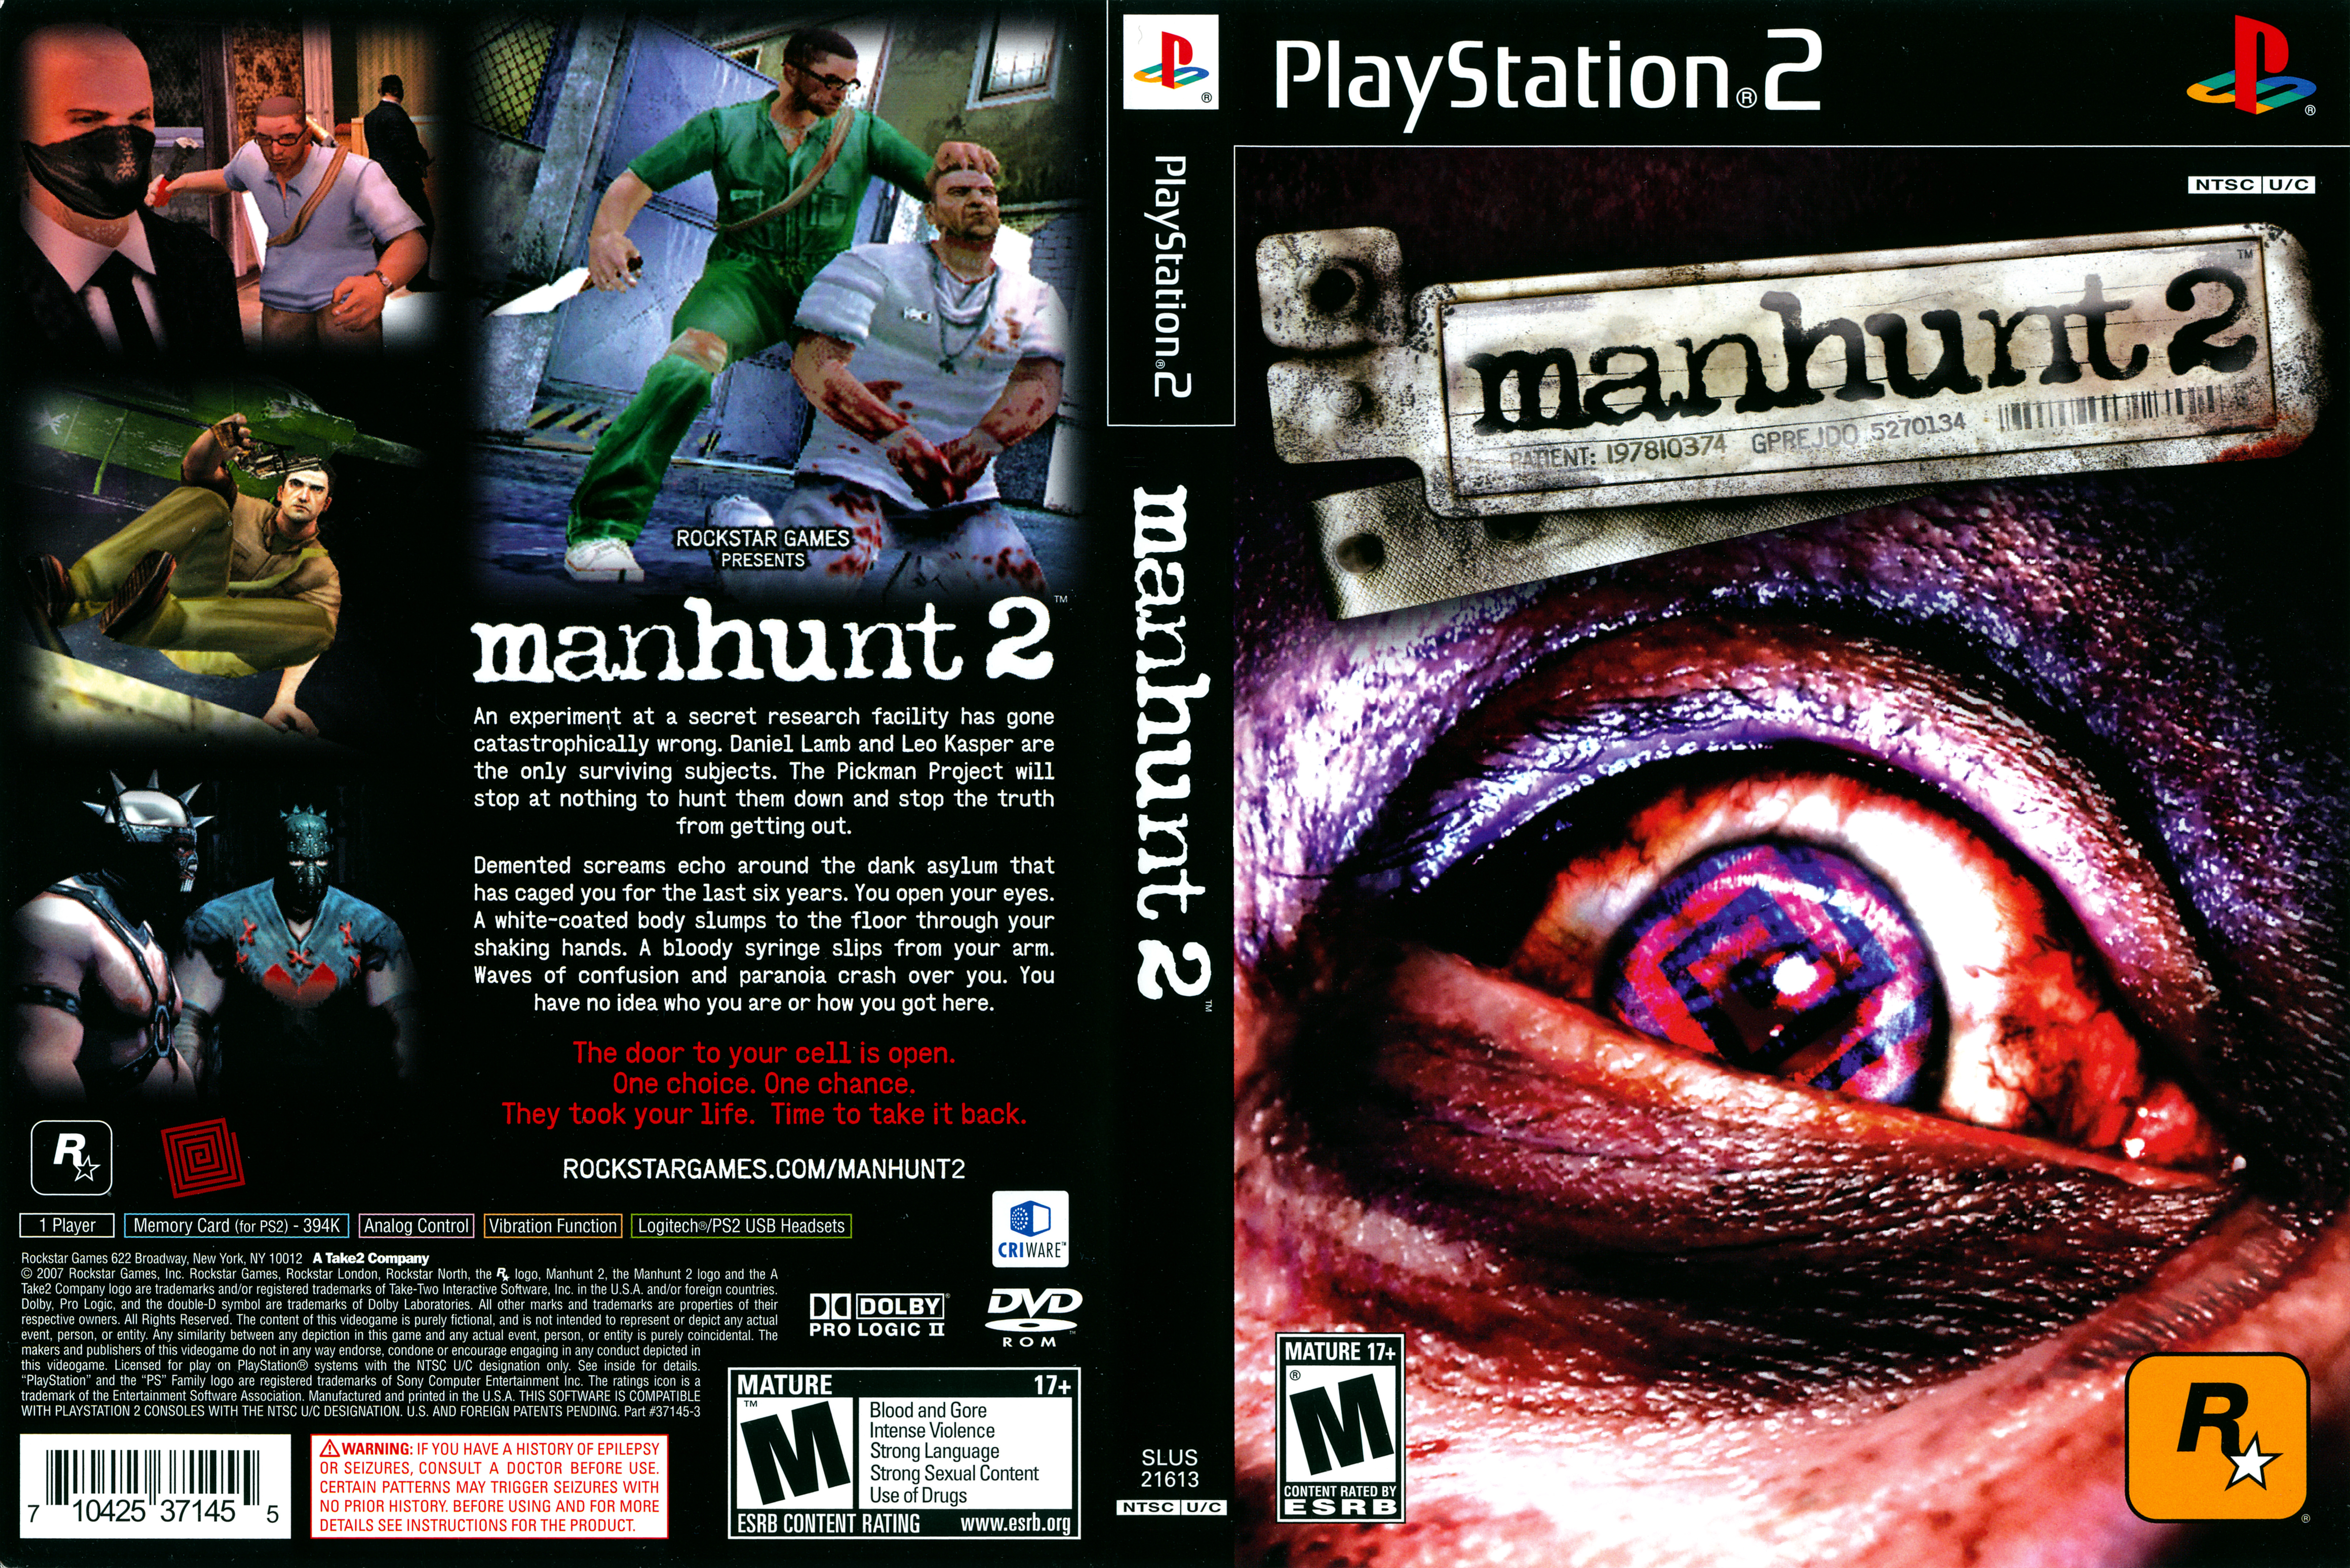 Manhunt 2 список игр от rockstar games